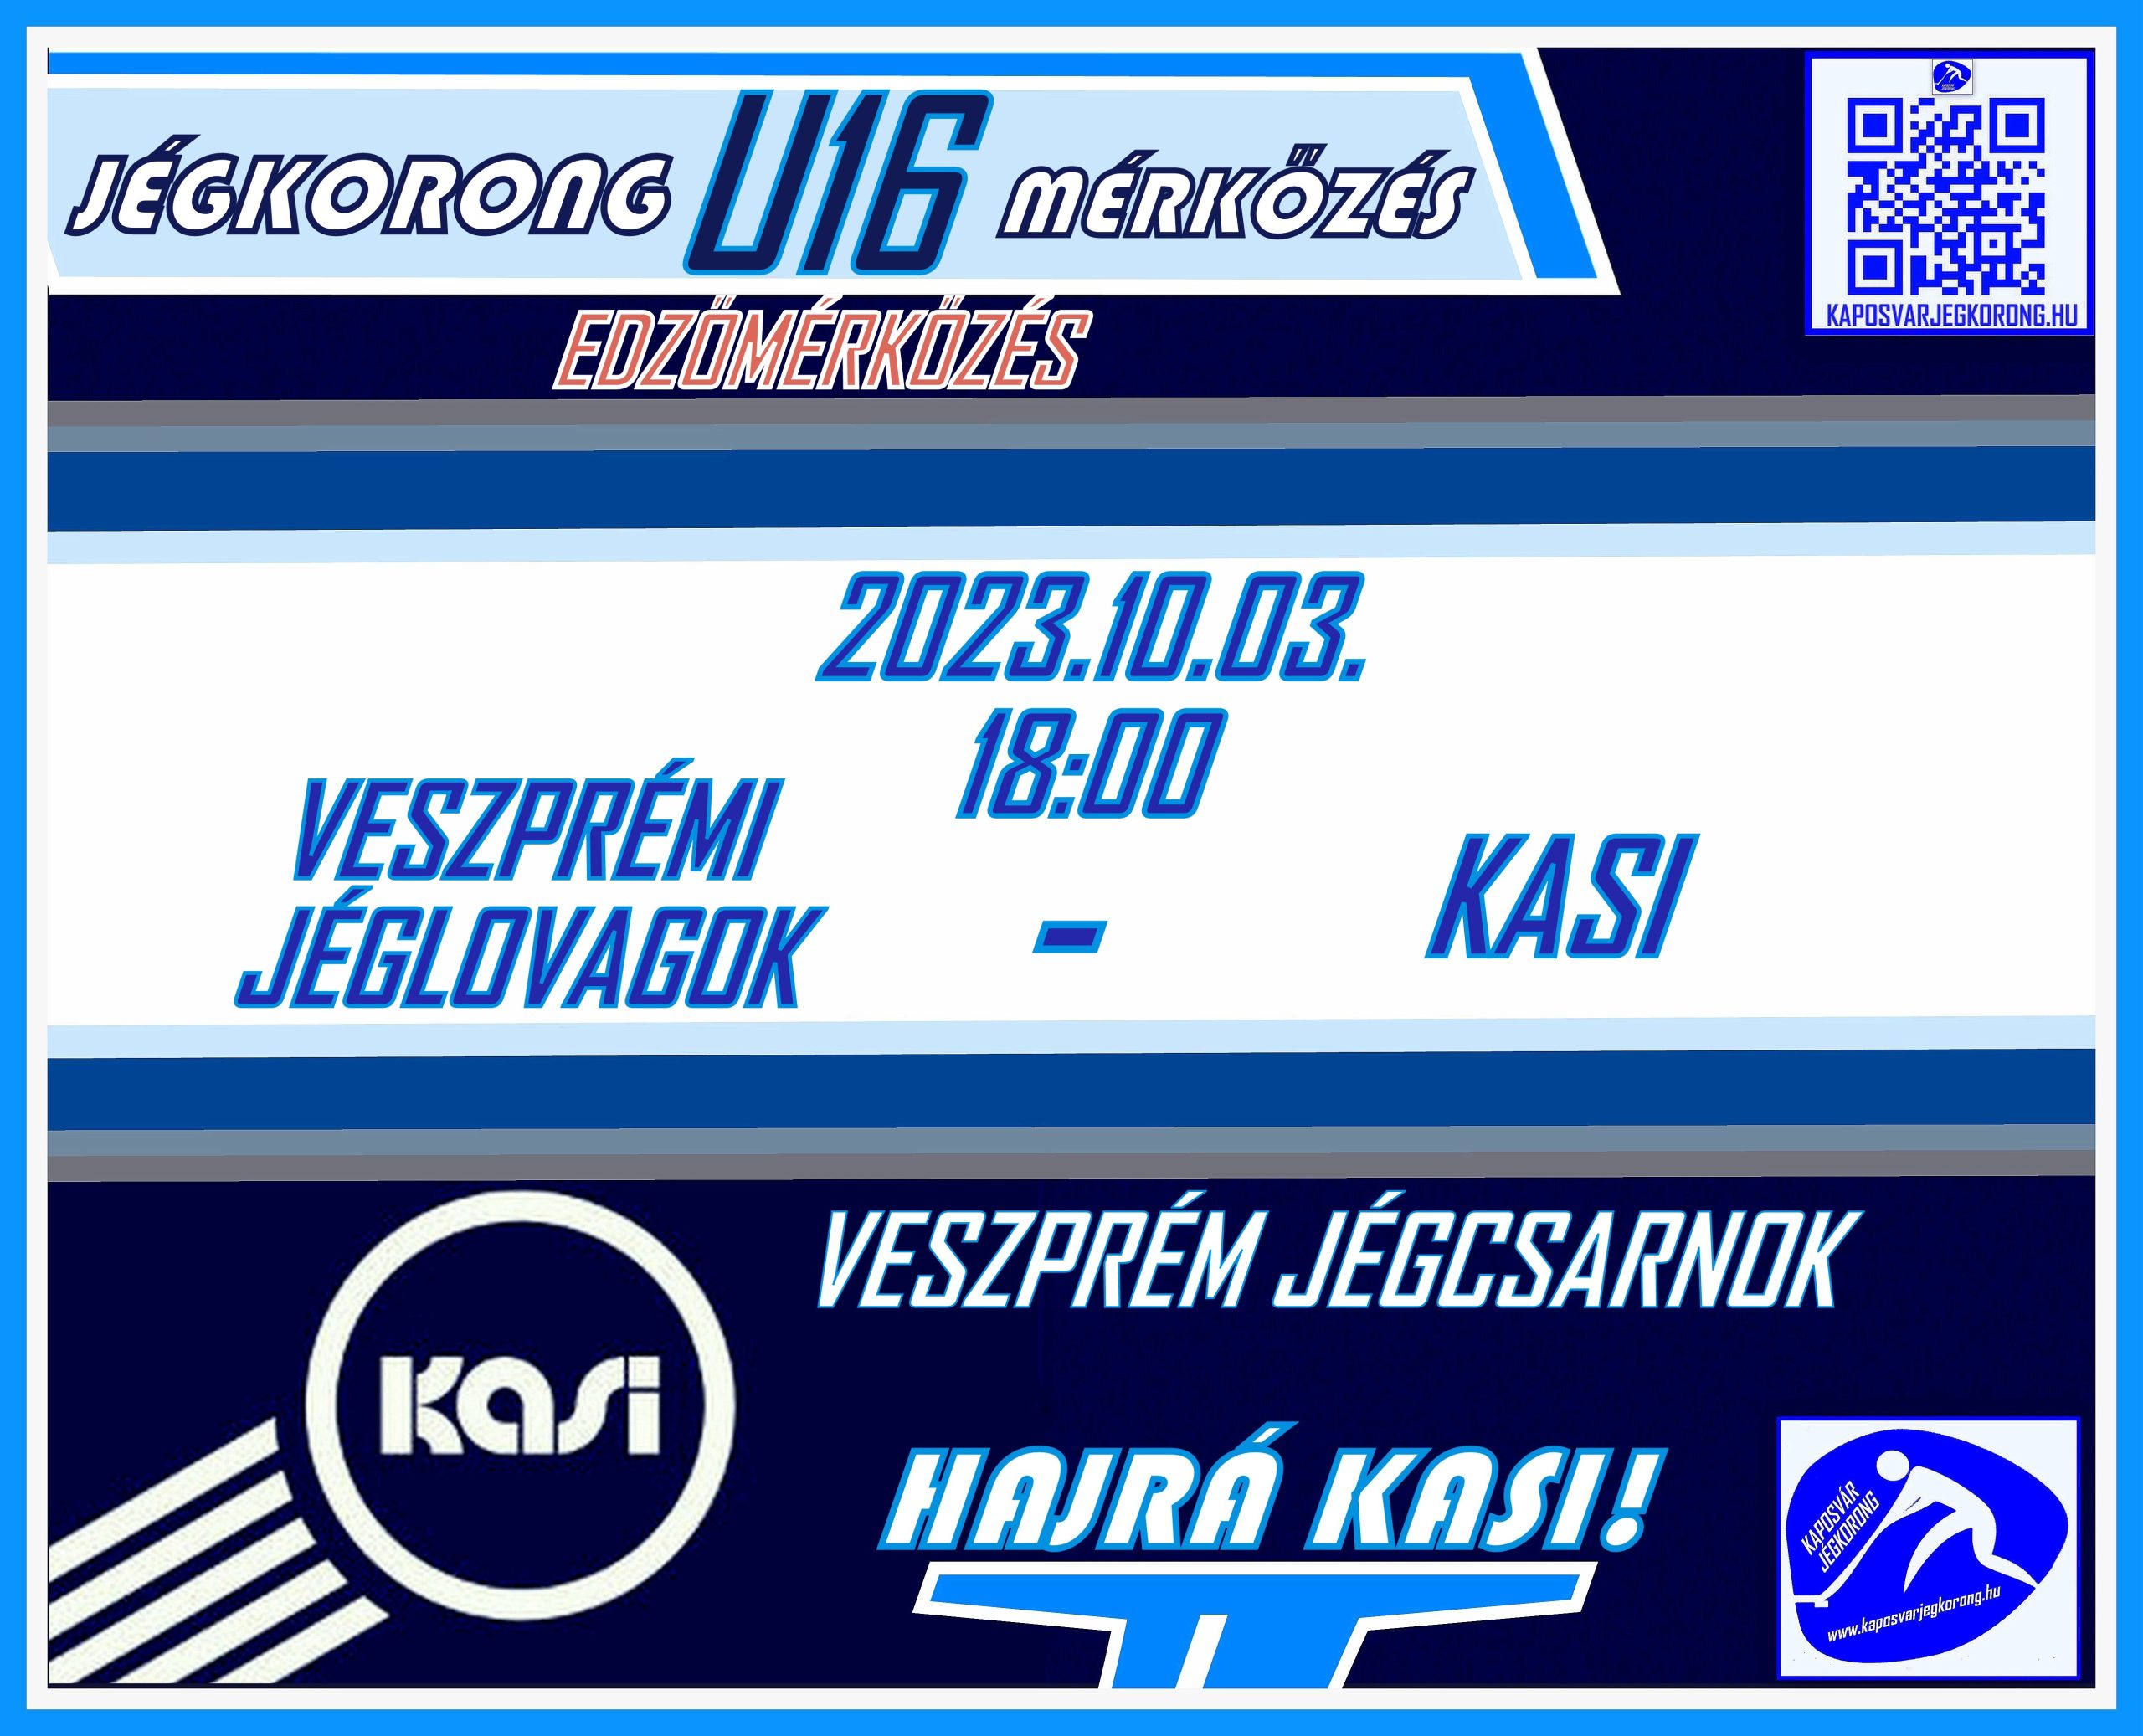 You are currently viewing U16 Edzőmérkőzés – Veszprémi jéglovagok – Kasi 